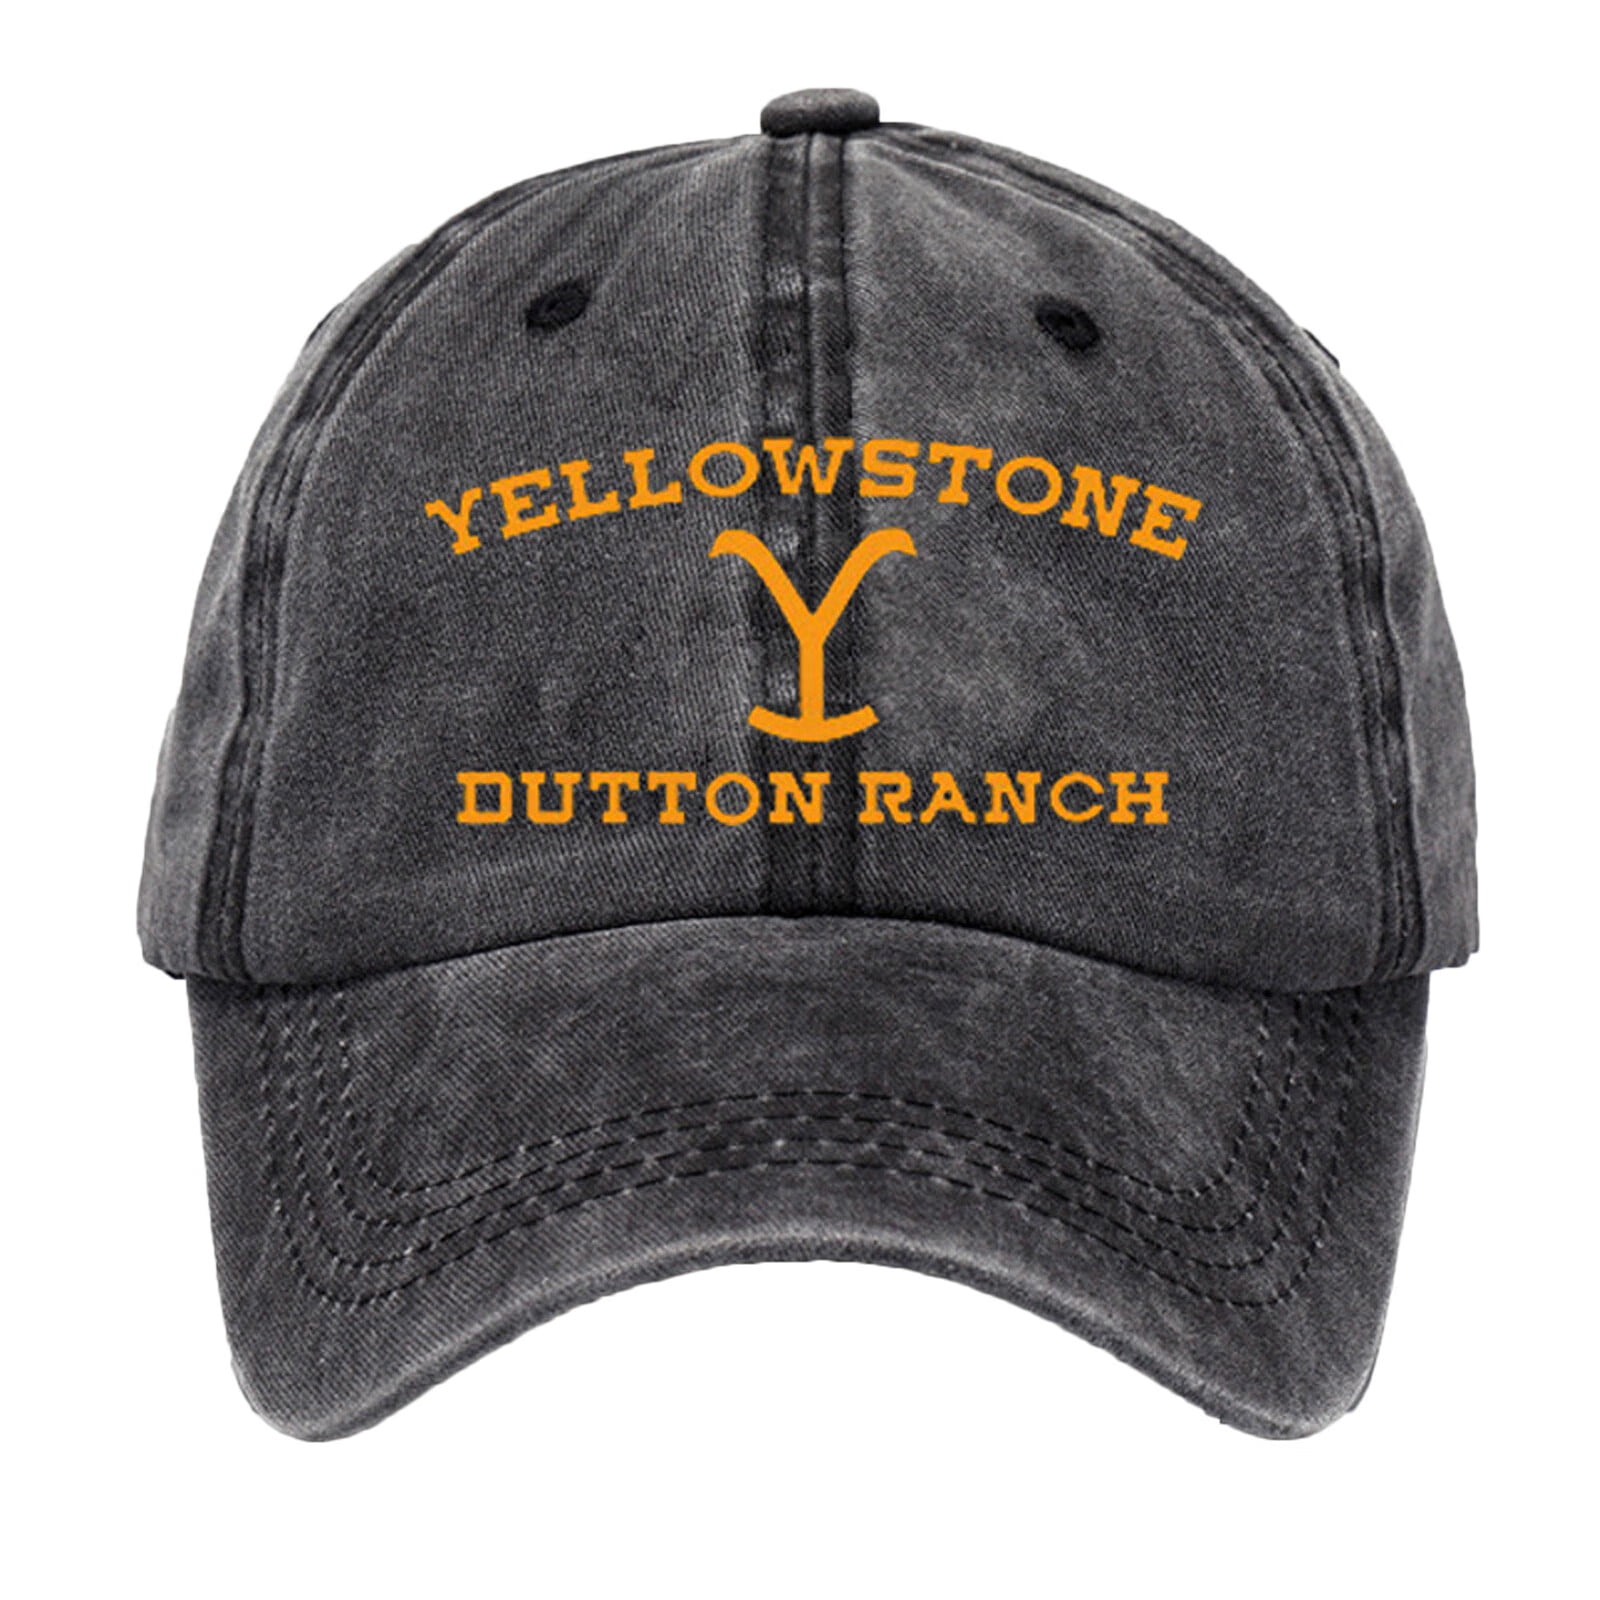 itruty Yellowstone Dutton Ranch Unisex Adjustable Casquette Travel Sunscreen Casquettes Black 